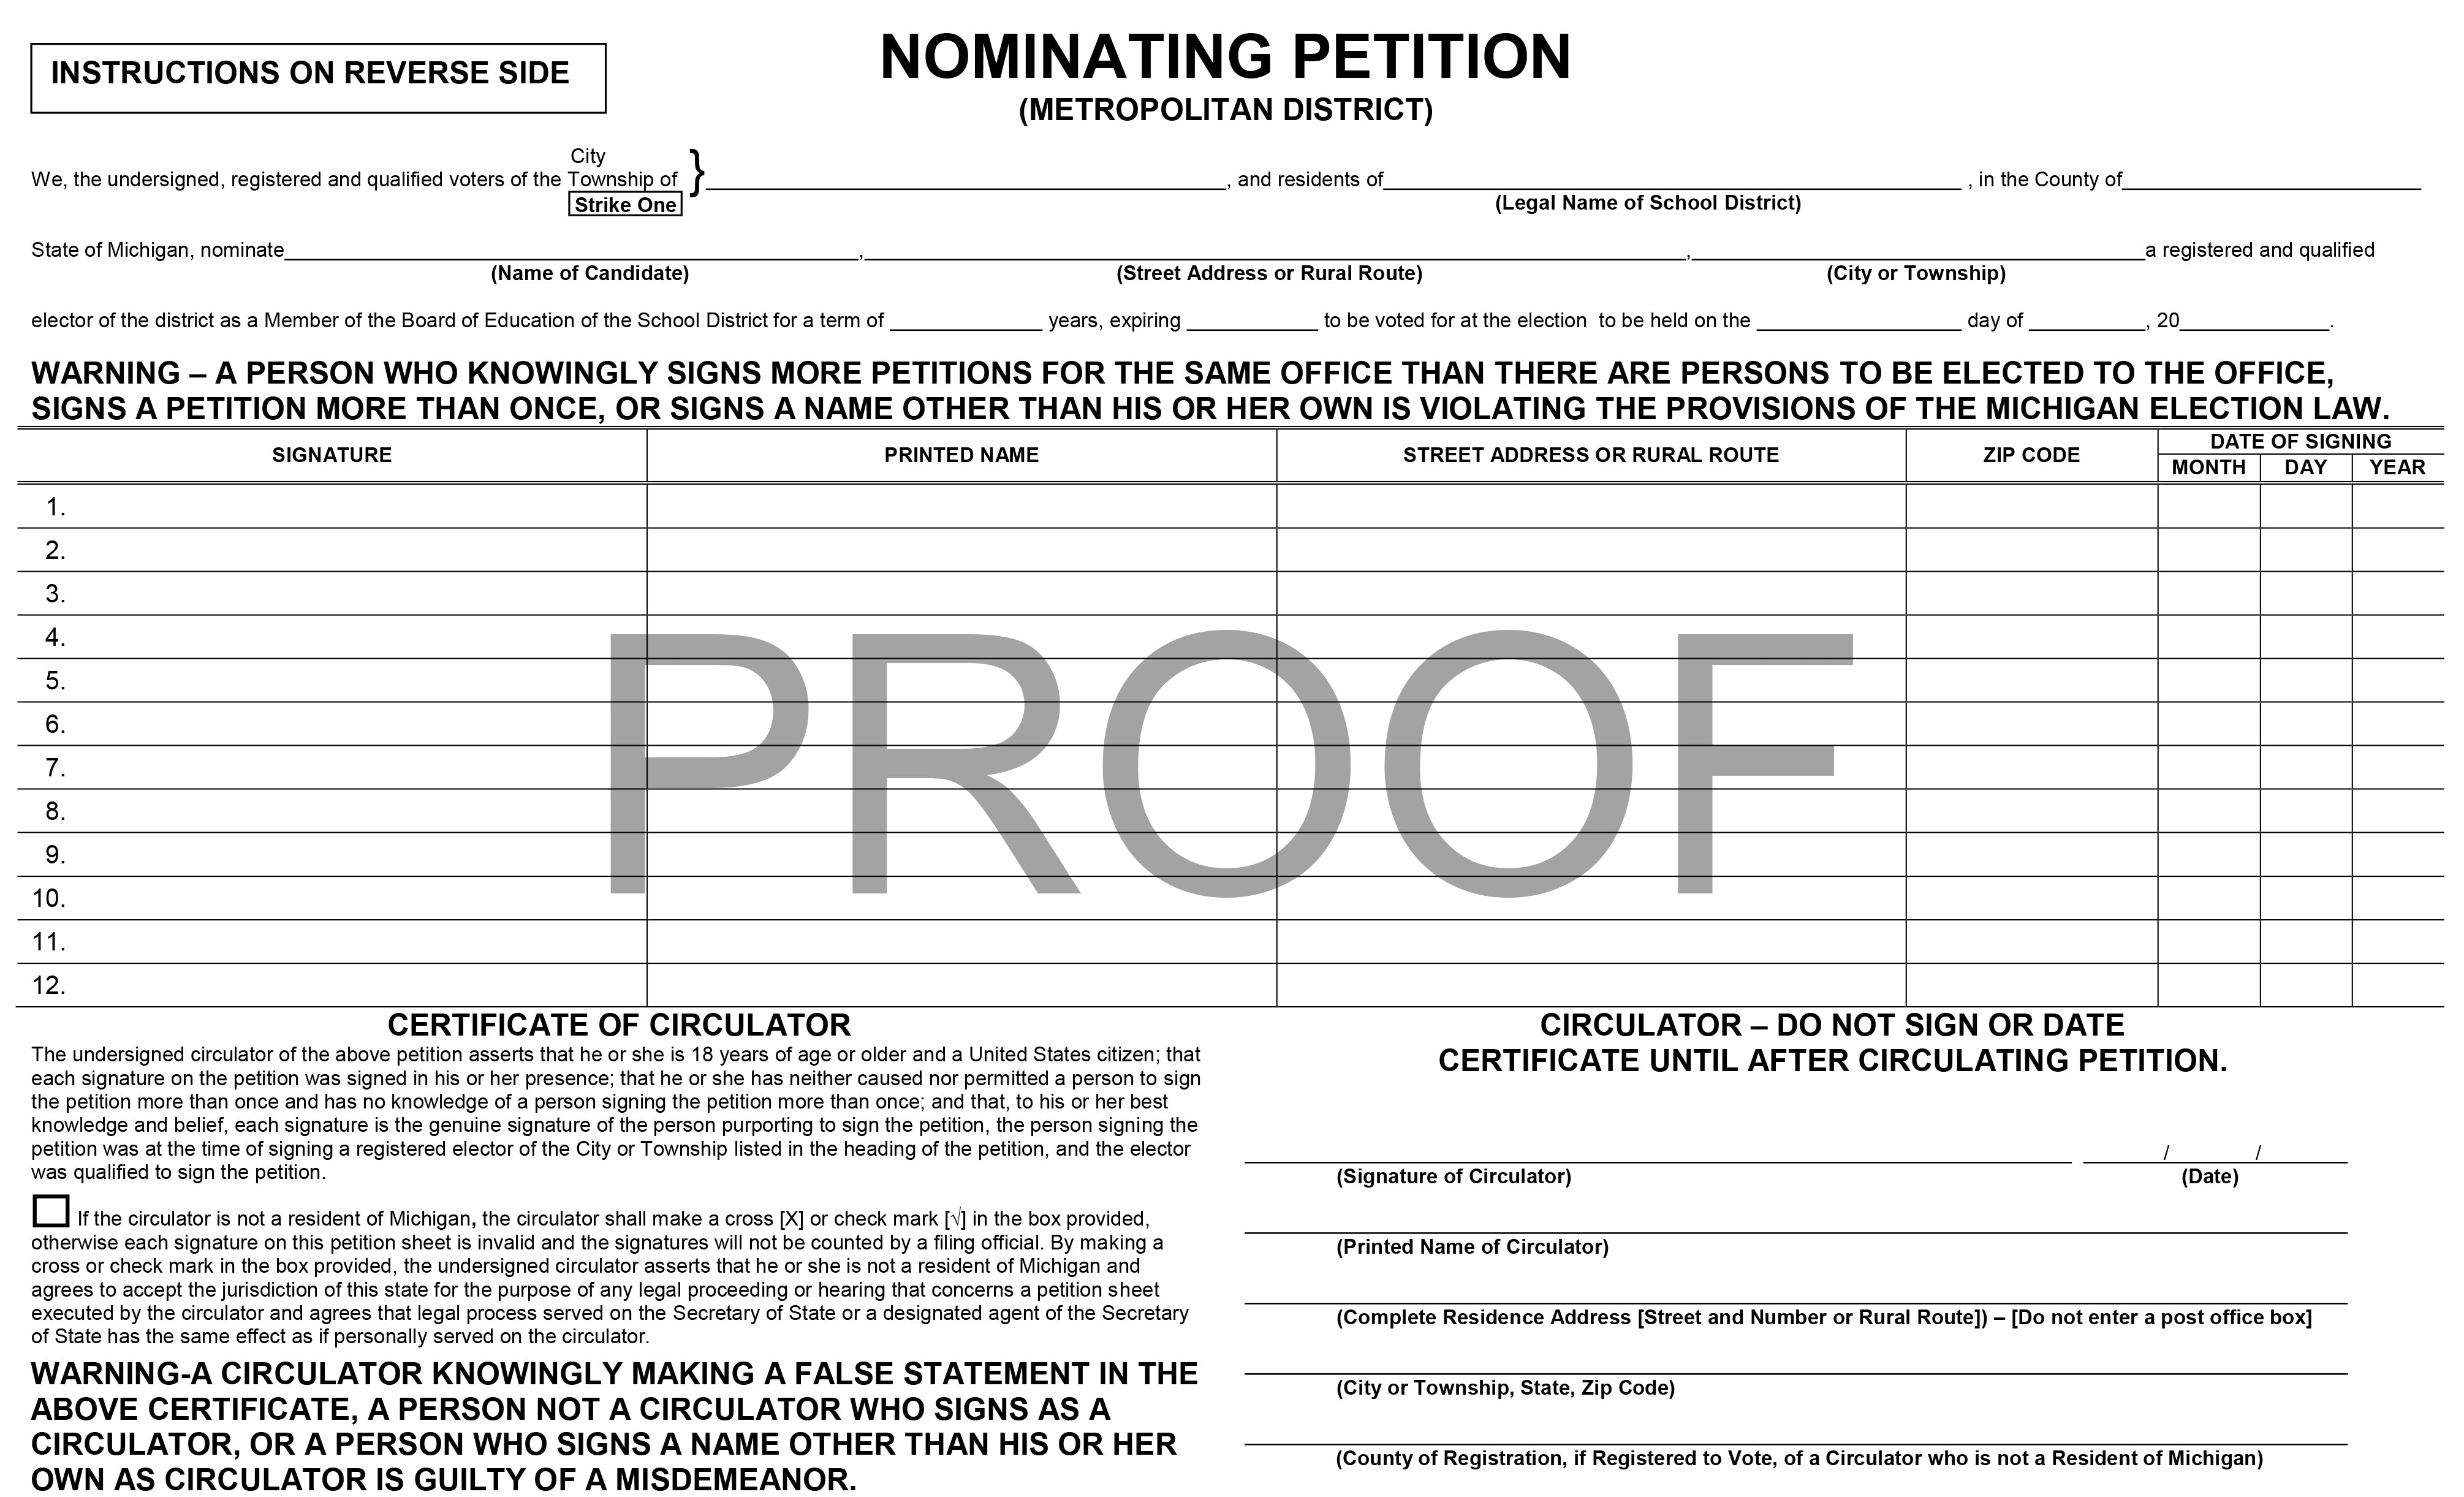 Nominating Petition Metropolitan District